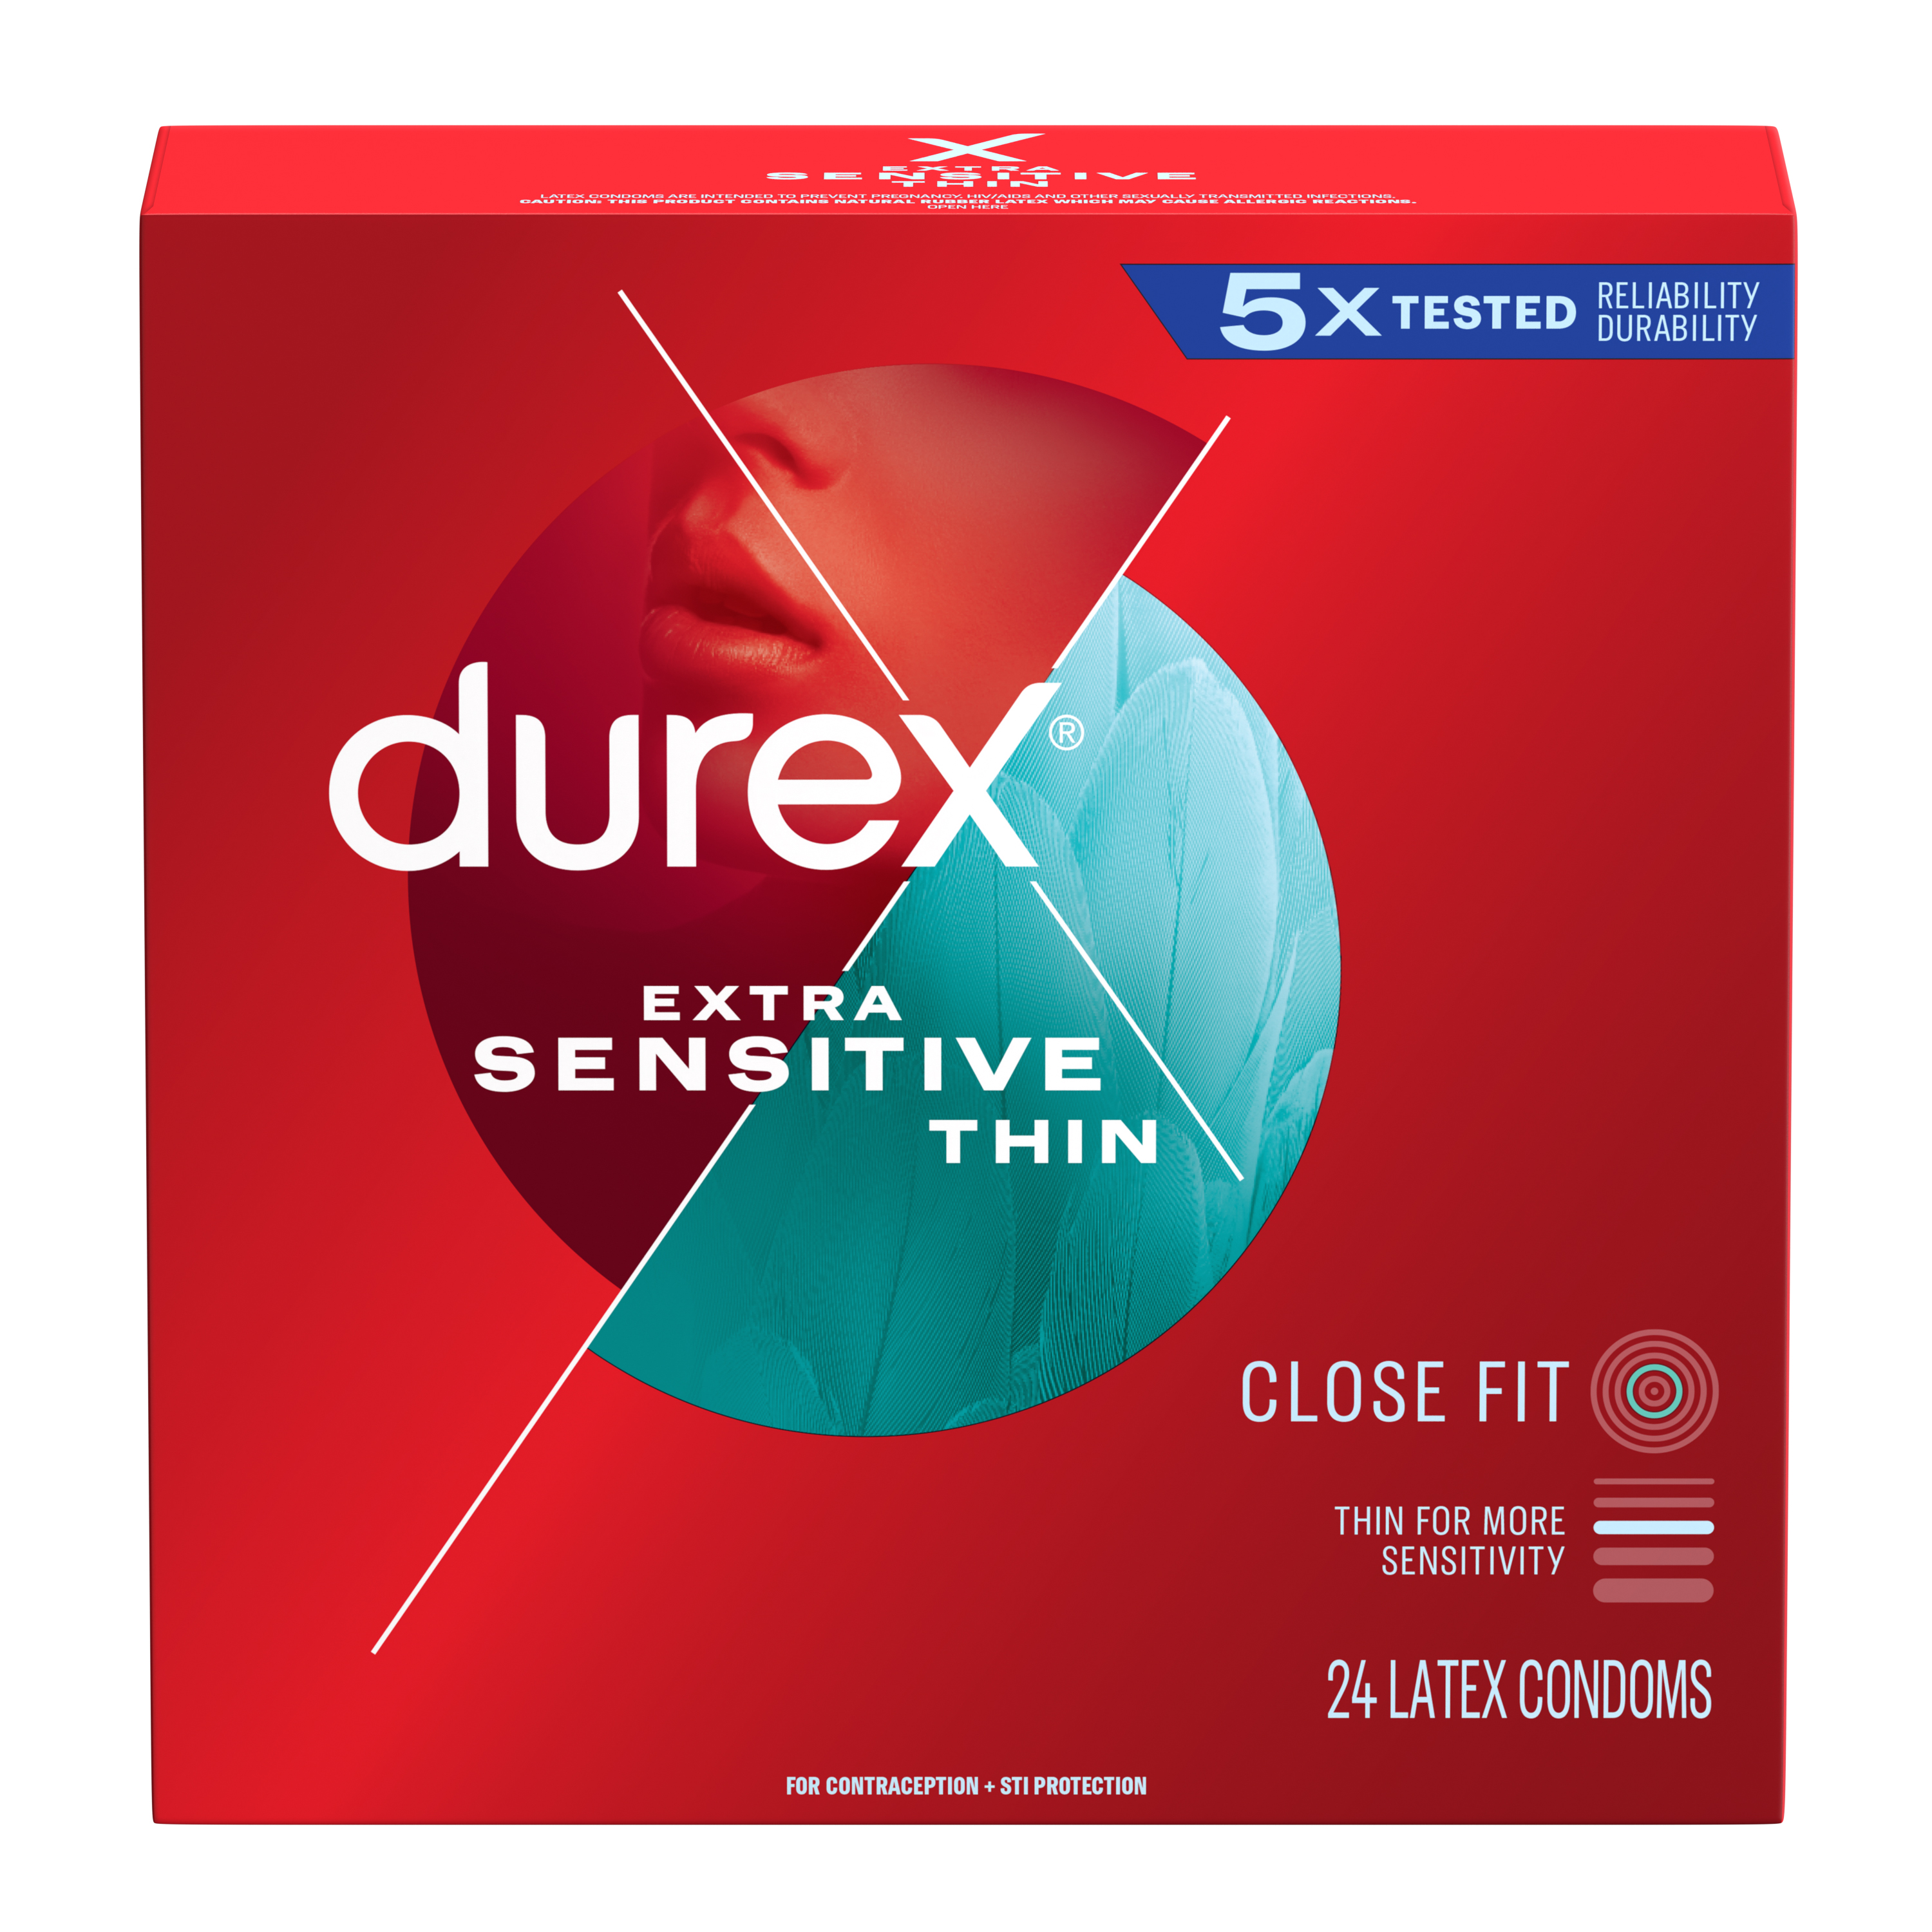 DUREX Extra Sensitive Thin Condoms  Close Fit